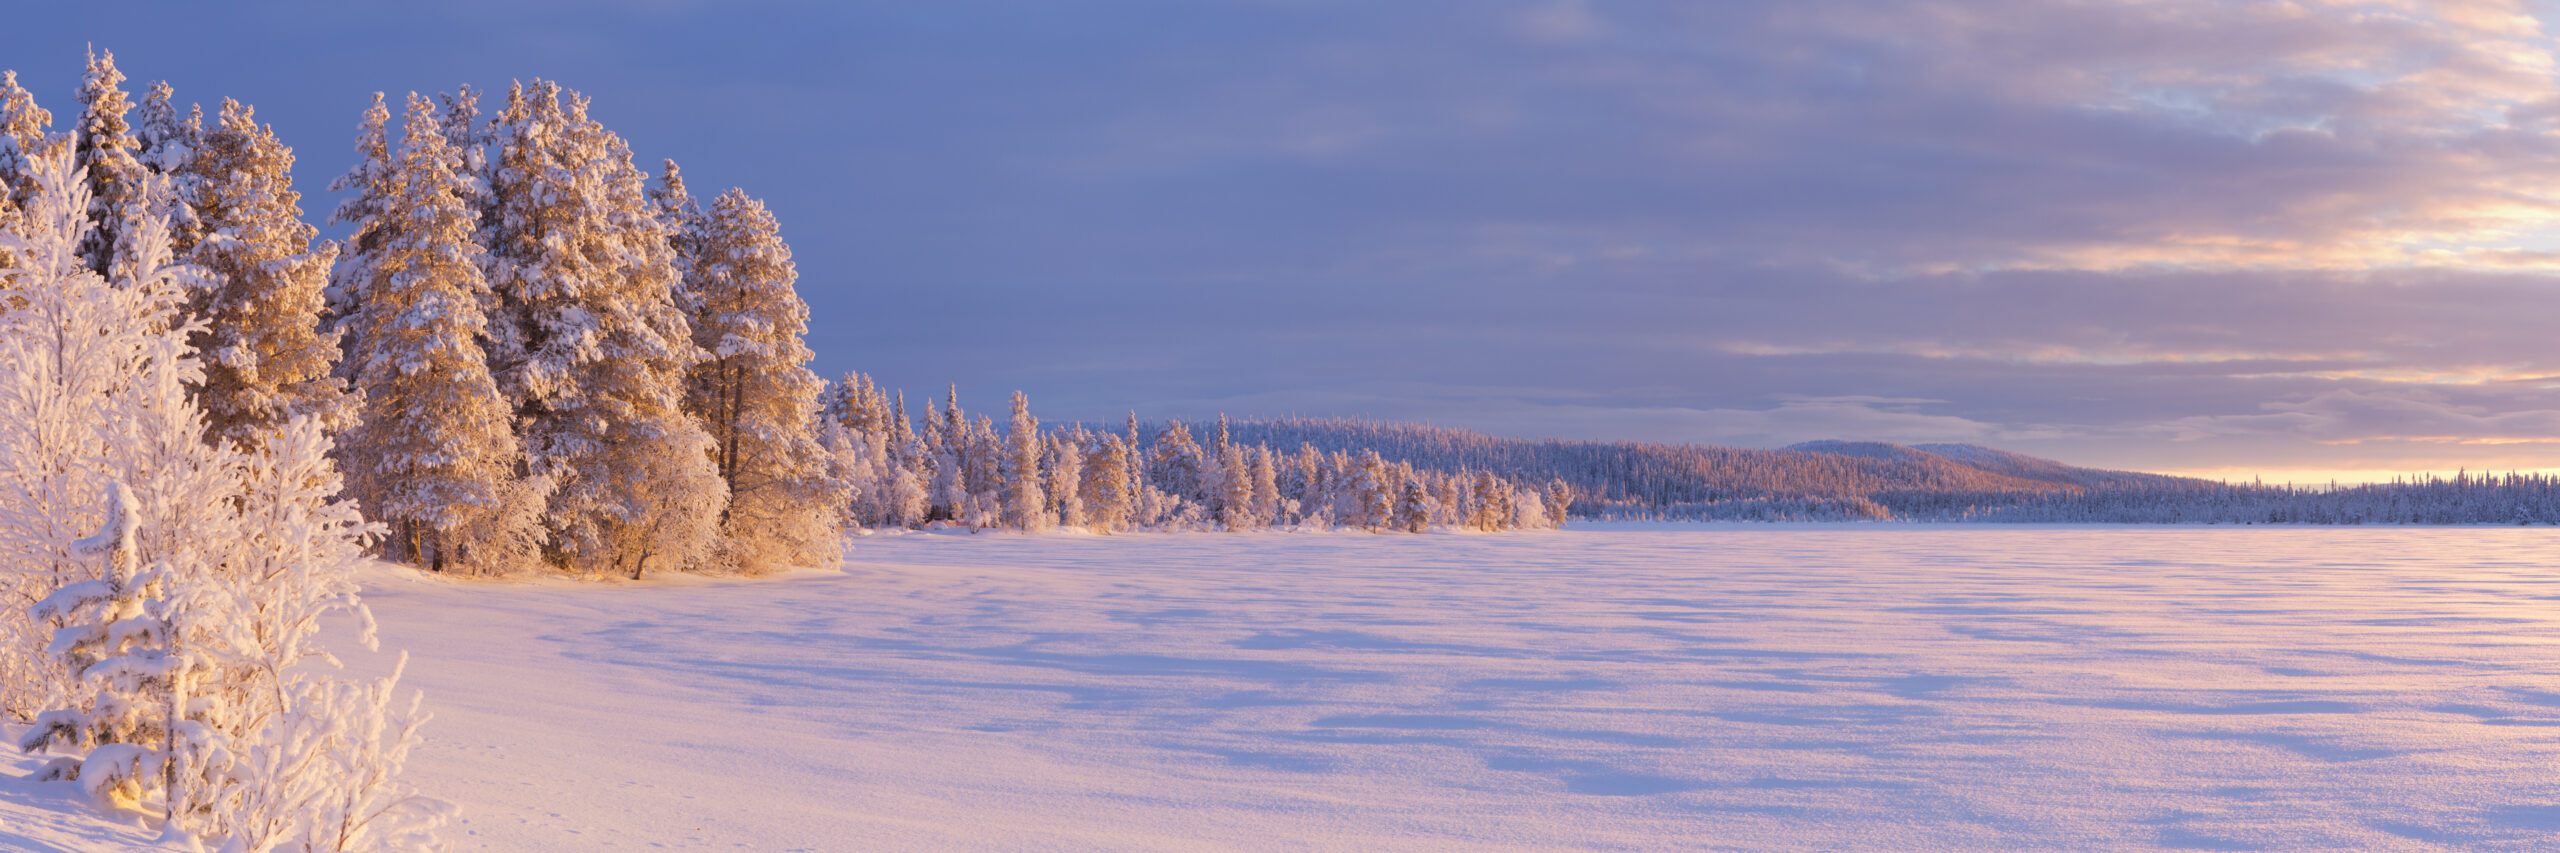 snowkite Lapland